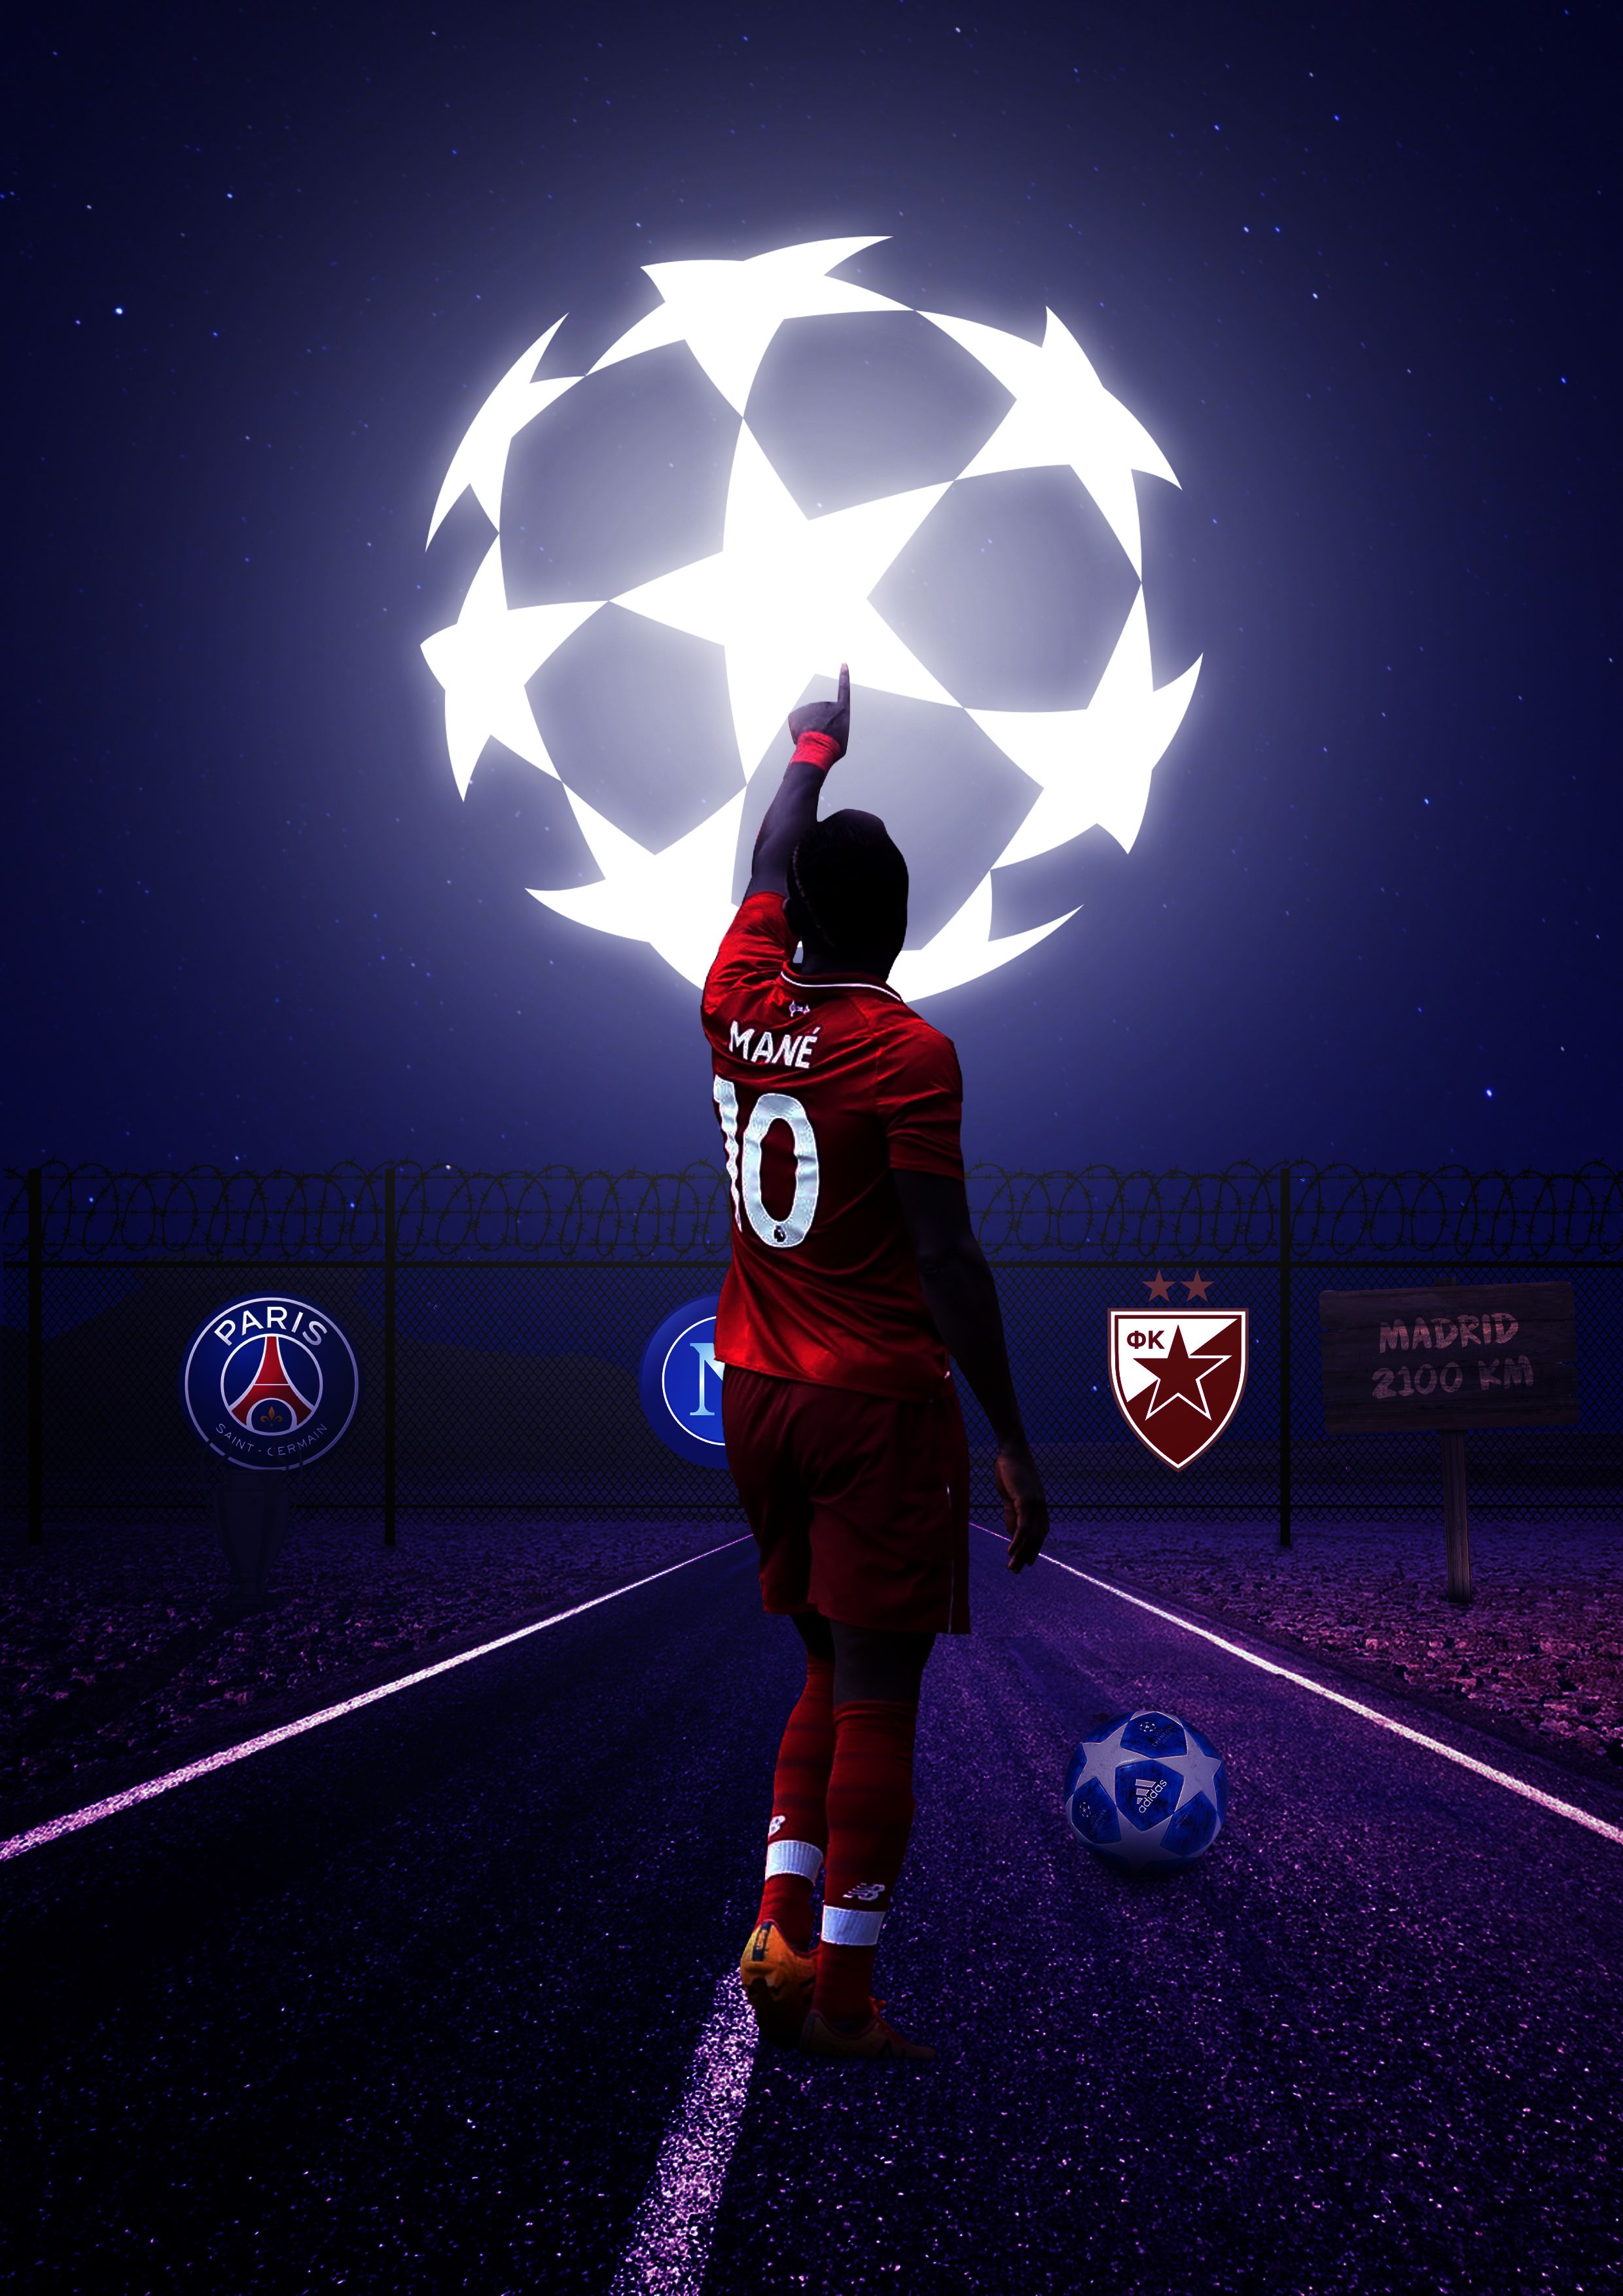 Sadio Mane Champions League Poster: The Journey Begins